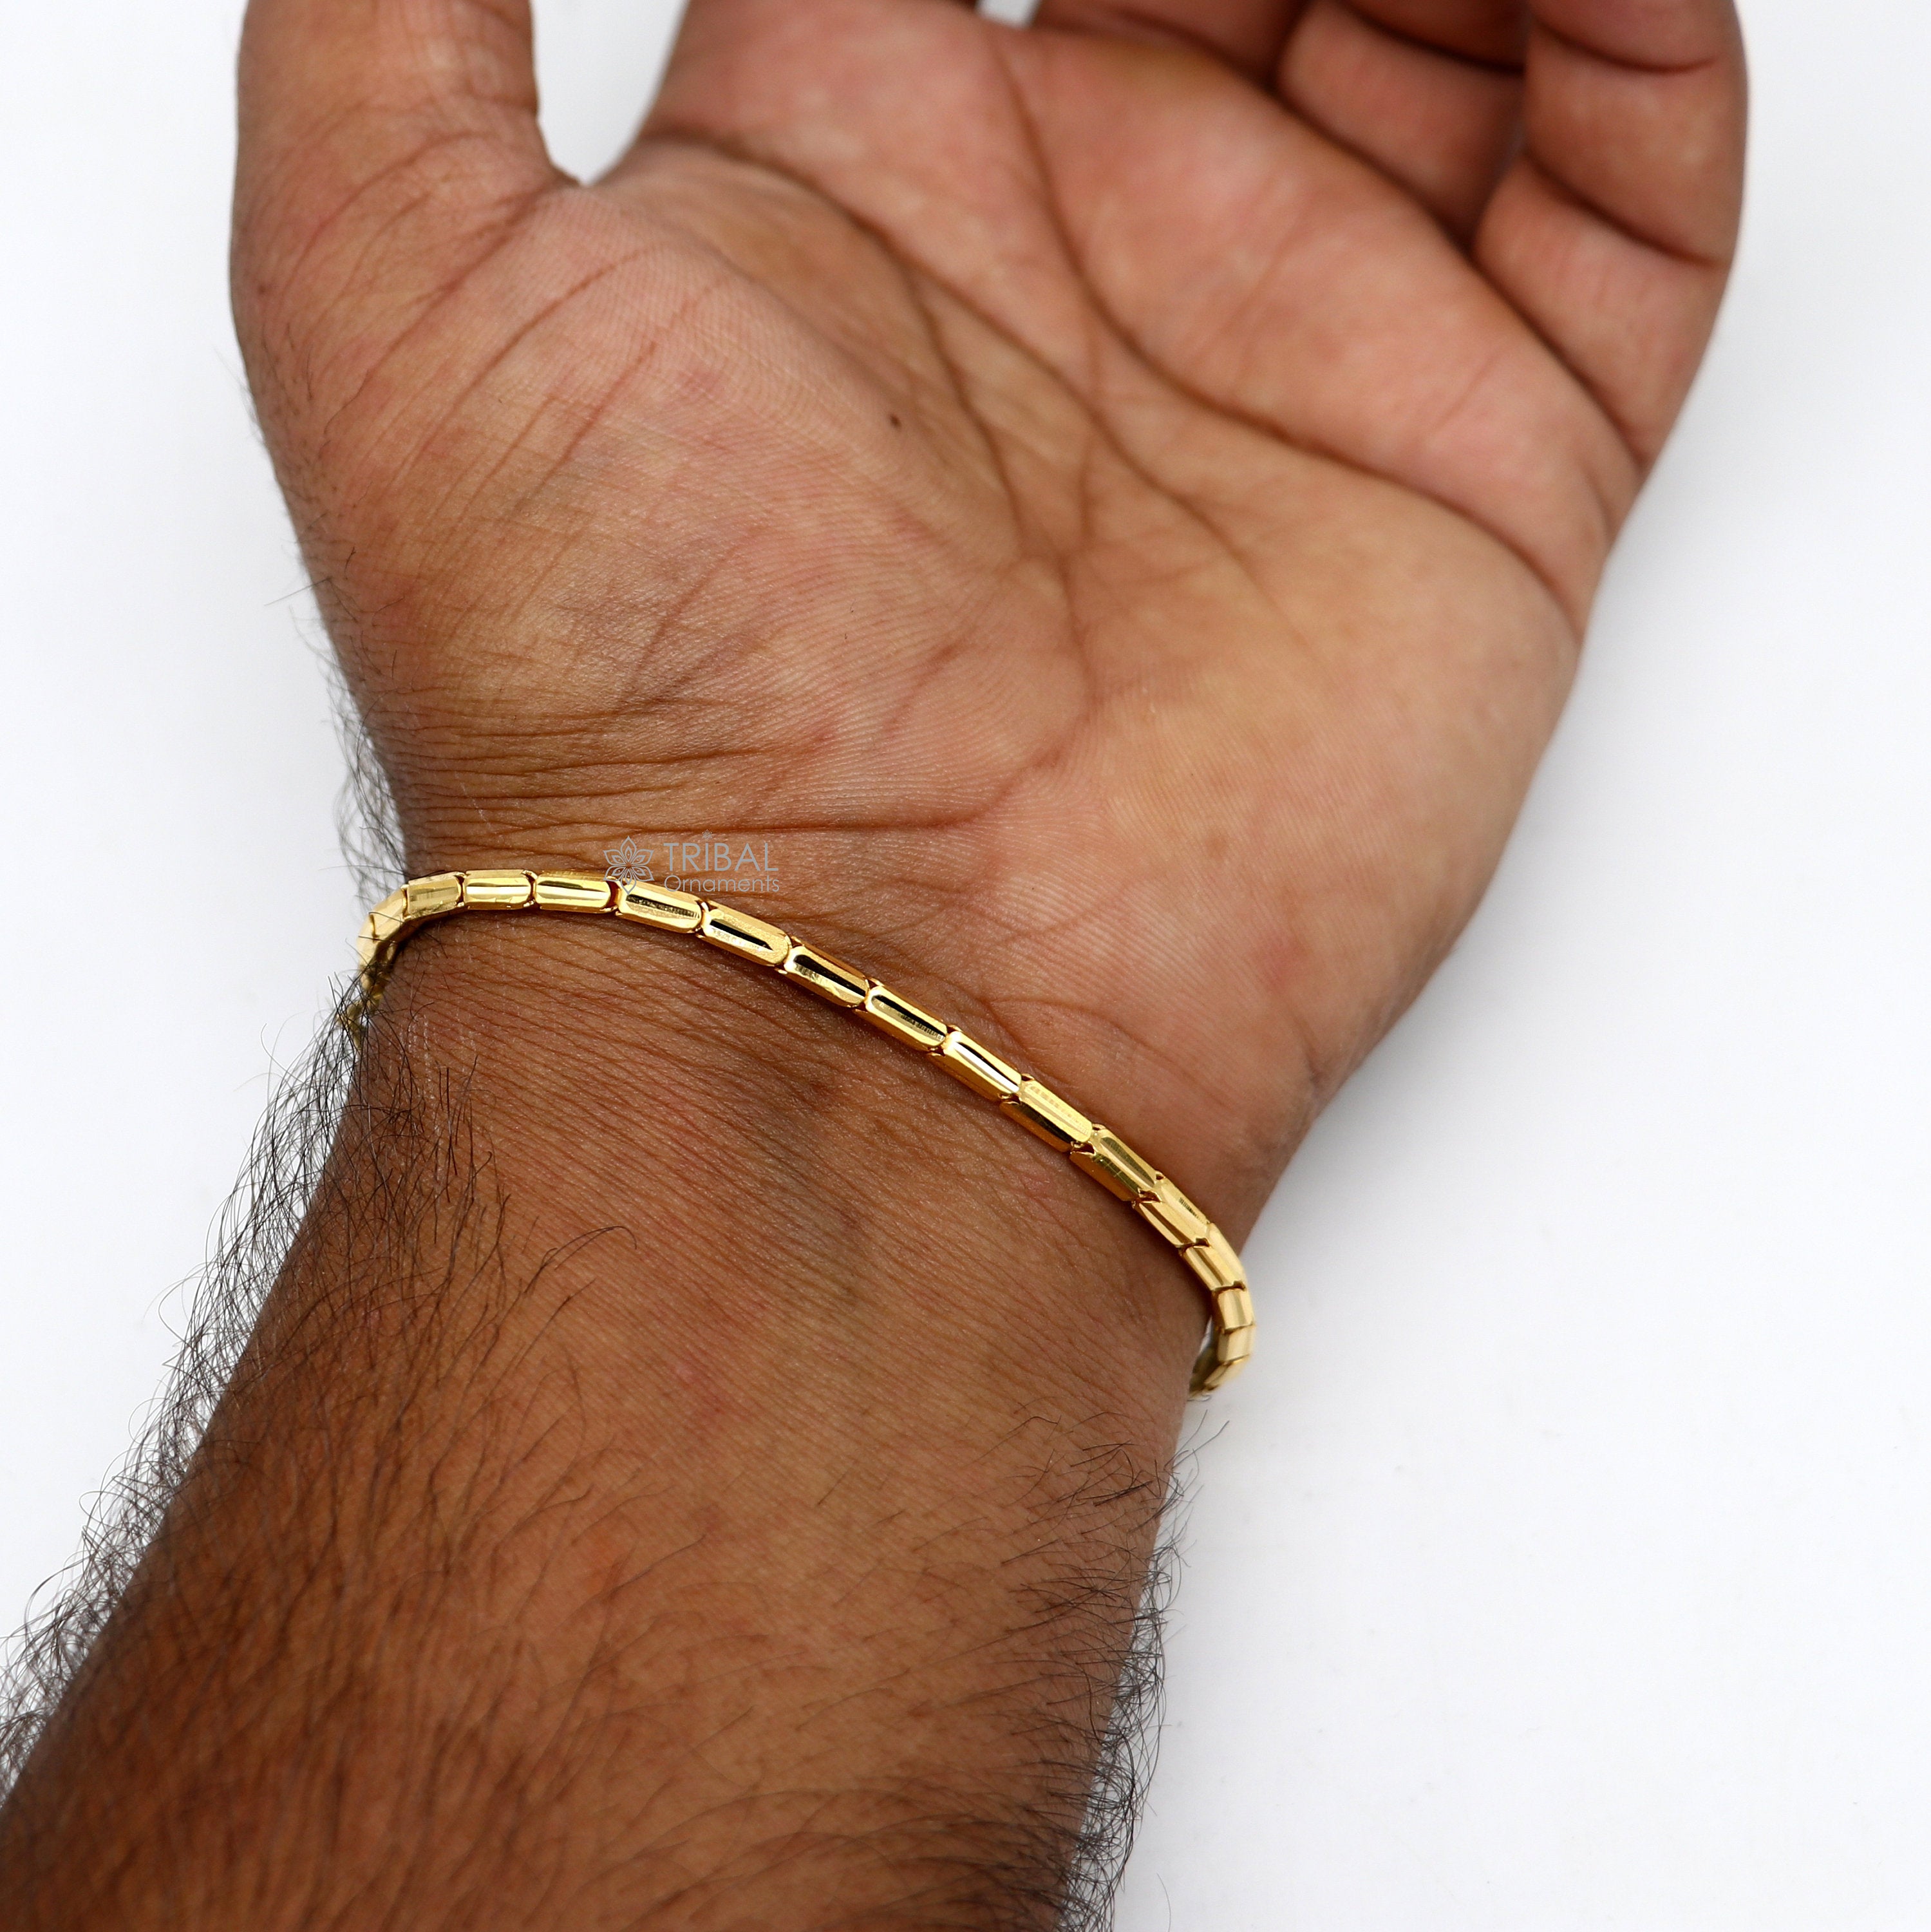 Get Cable Link Design Chain Bracelet at ₹ 800 | LBB Shop